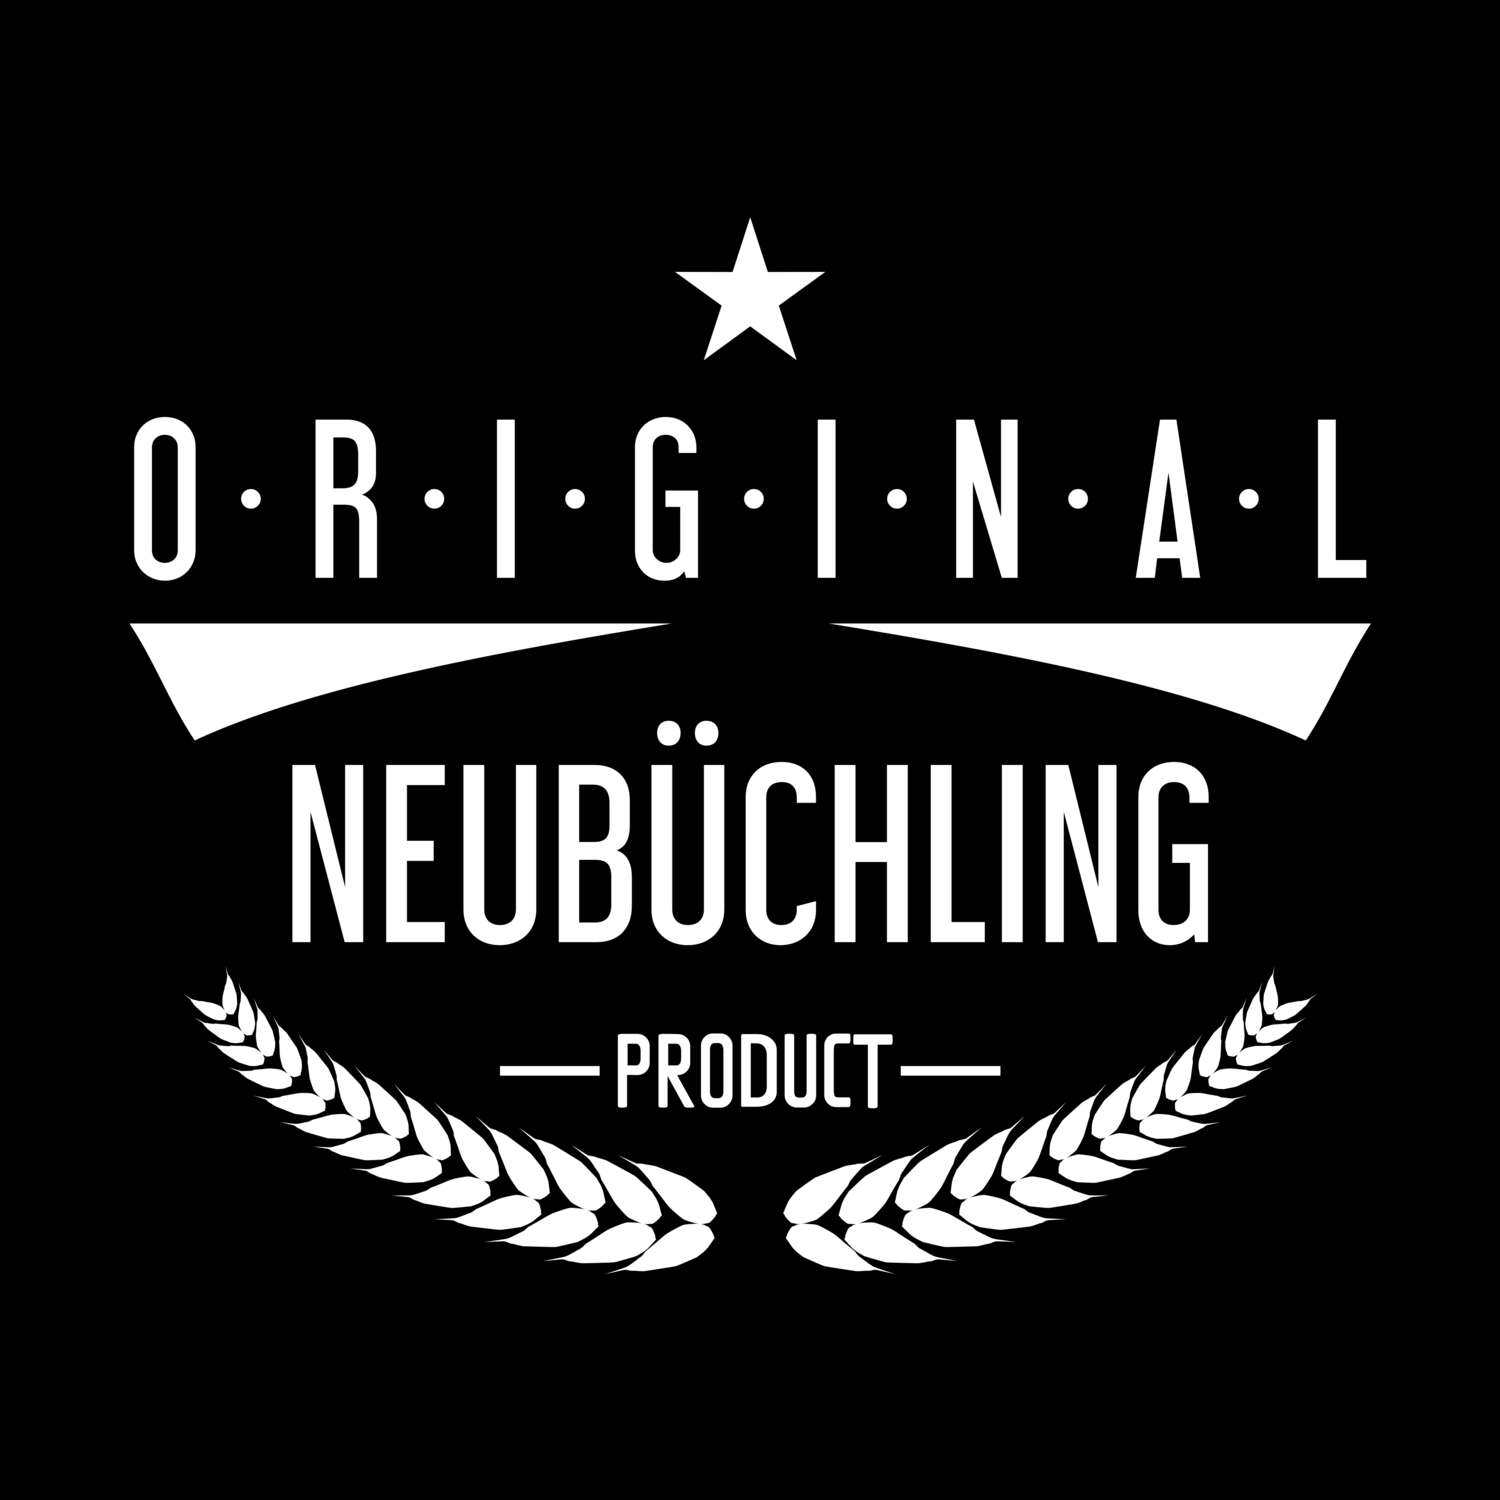 Neubüchling T-Shirt »Original Product«